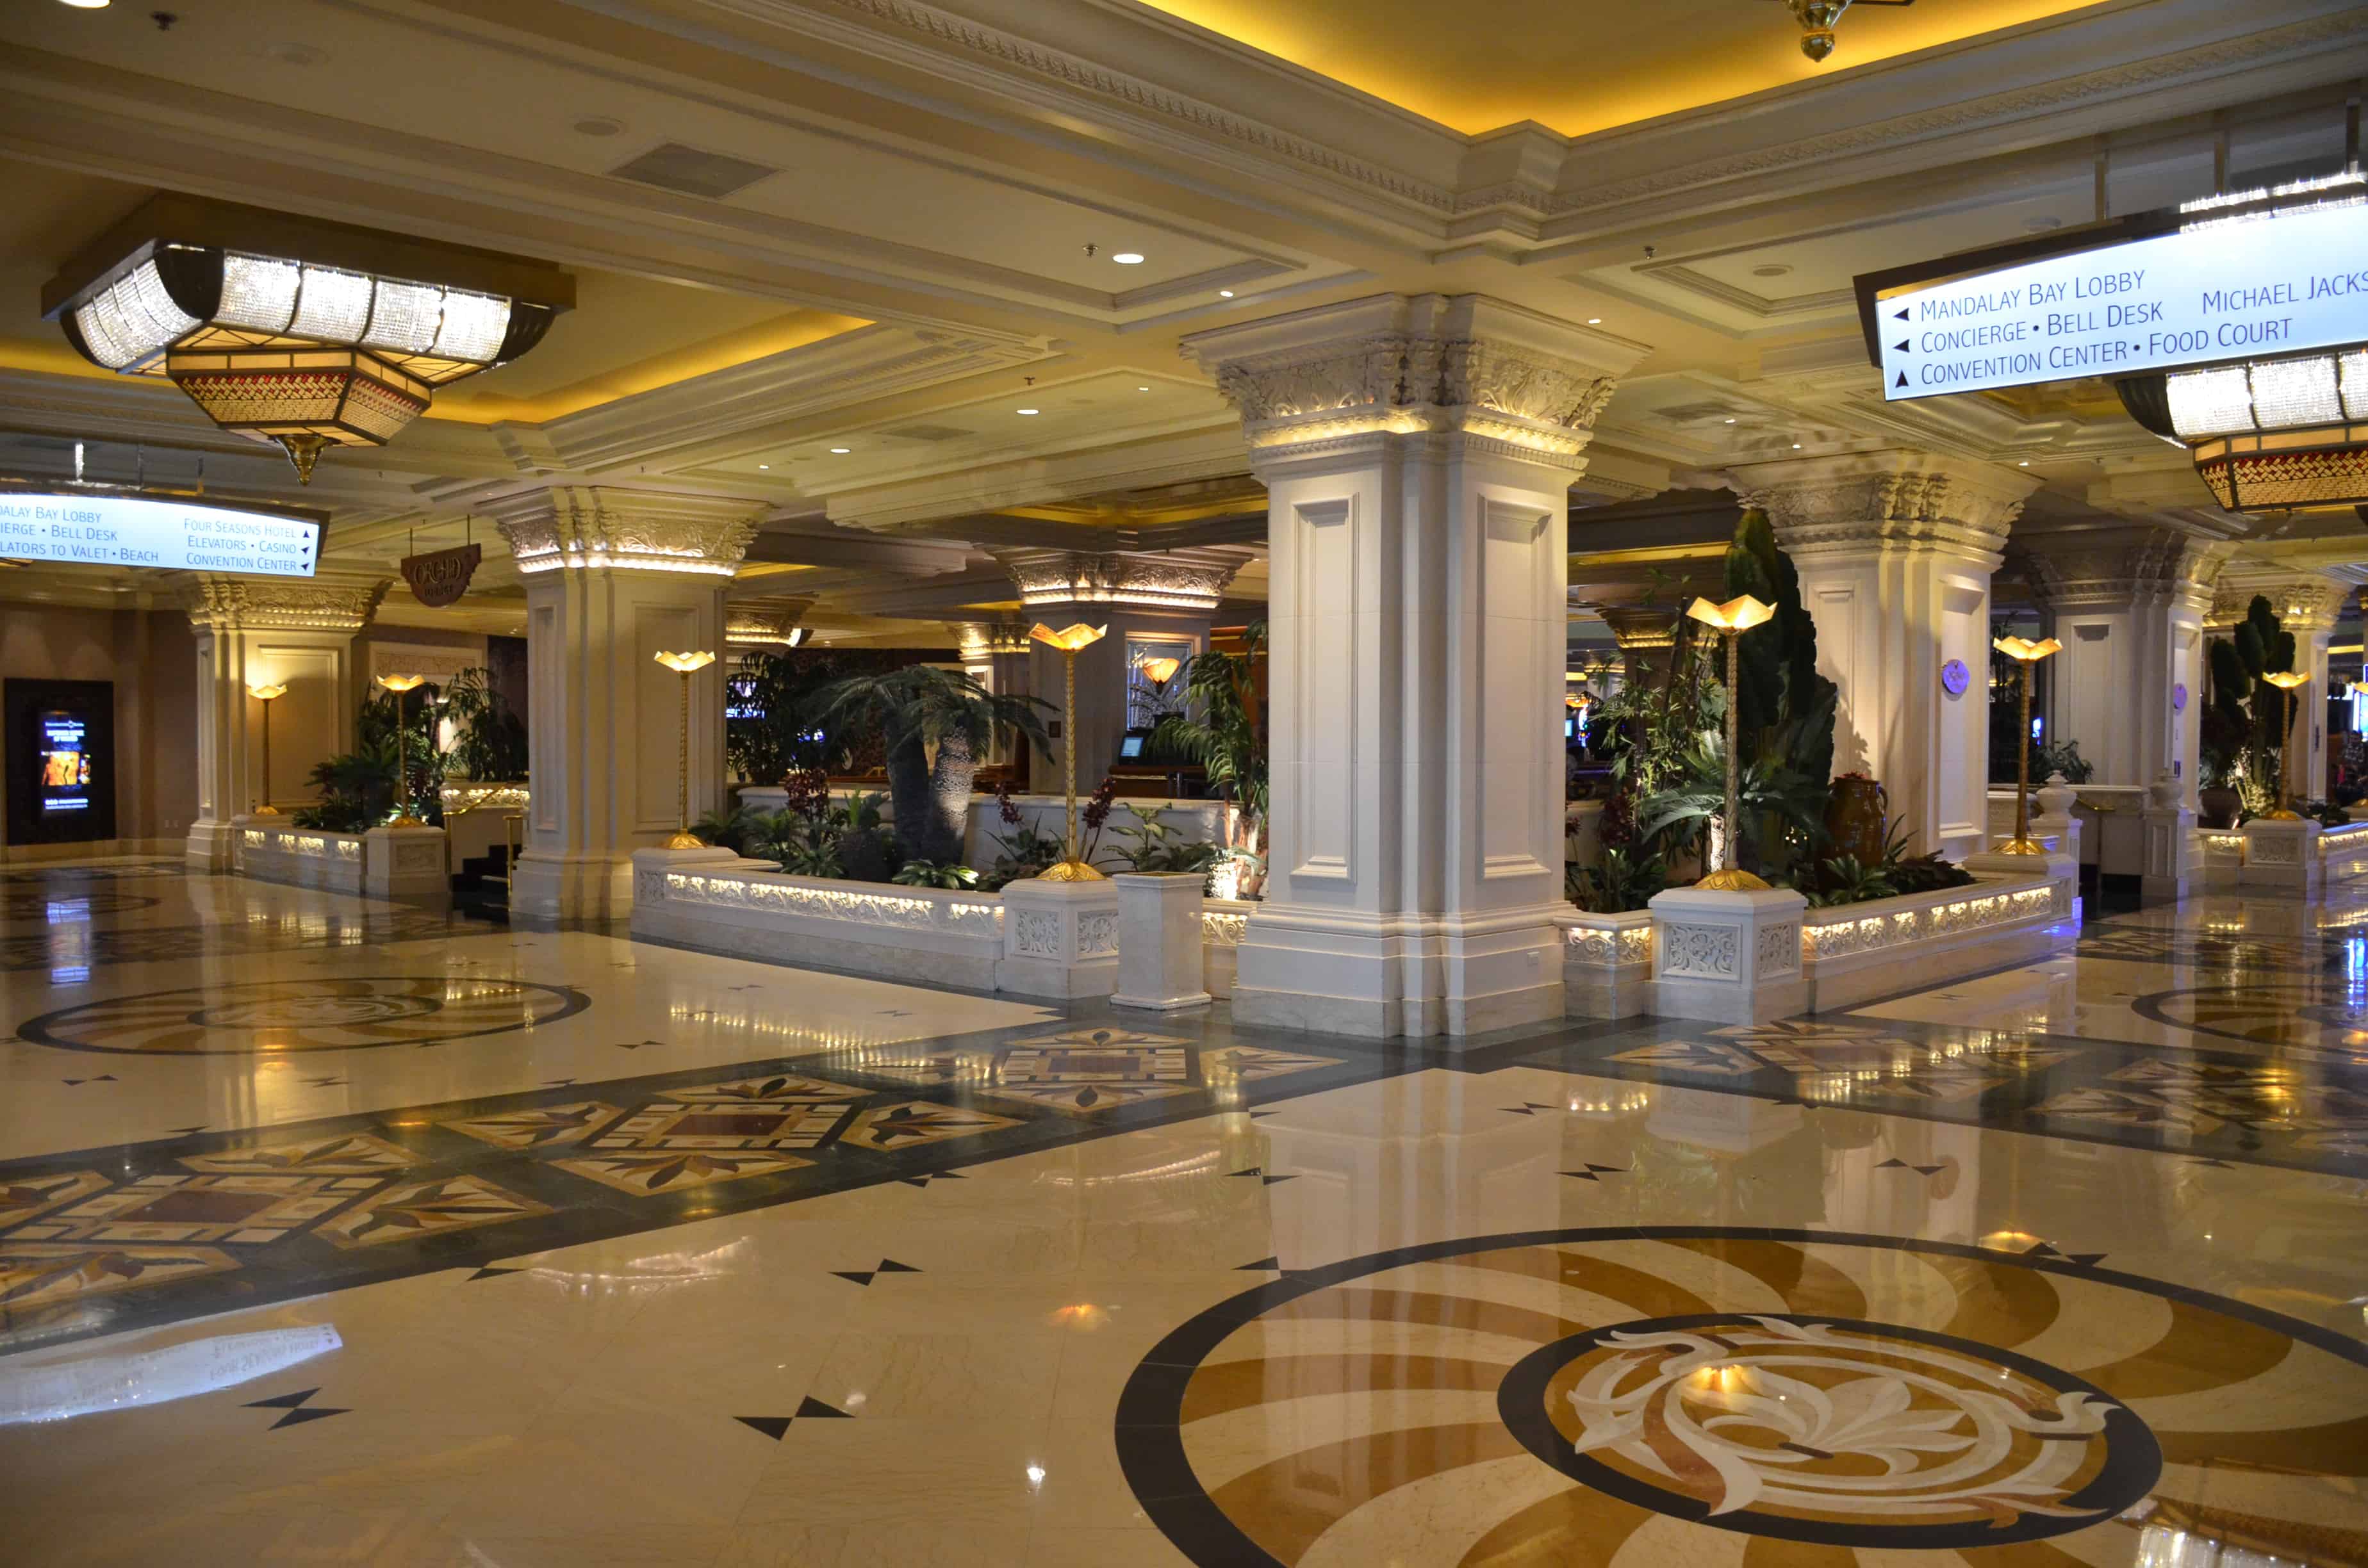 Lobby at Mandalay Bay, Las Vegas, Nevada